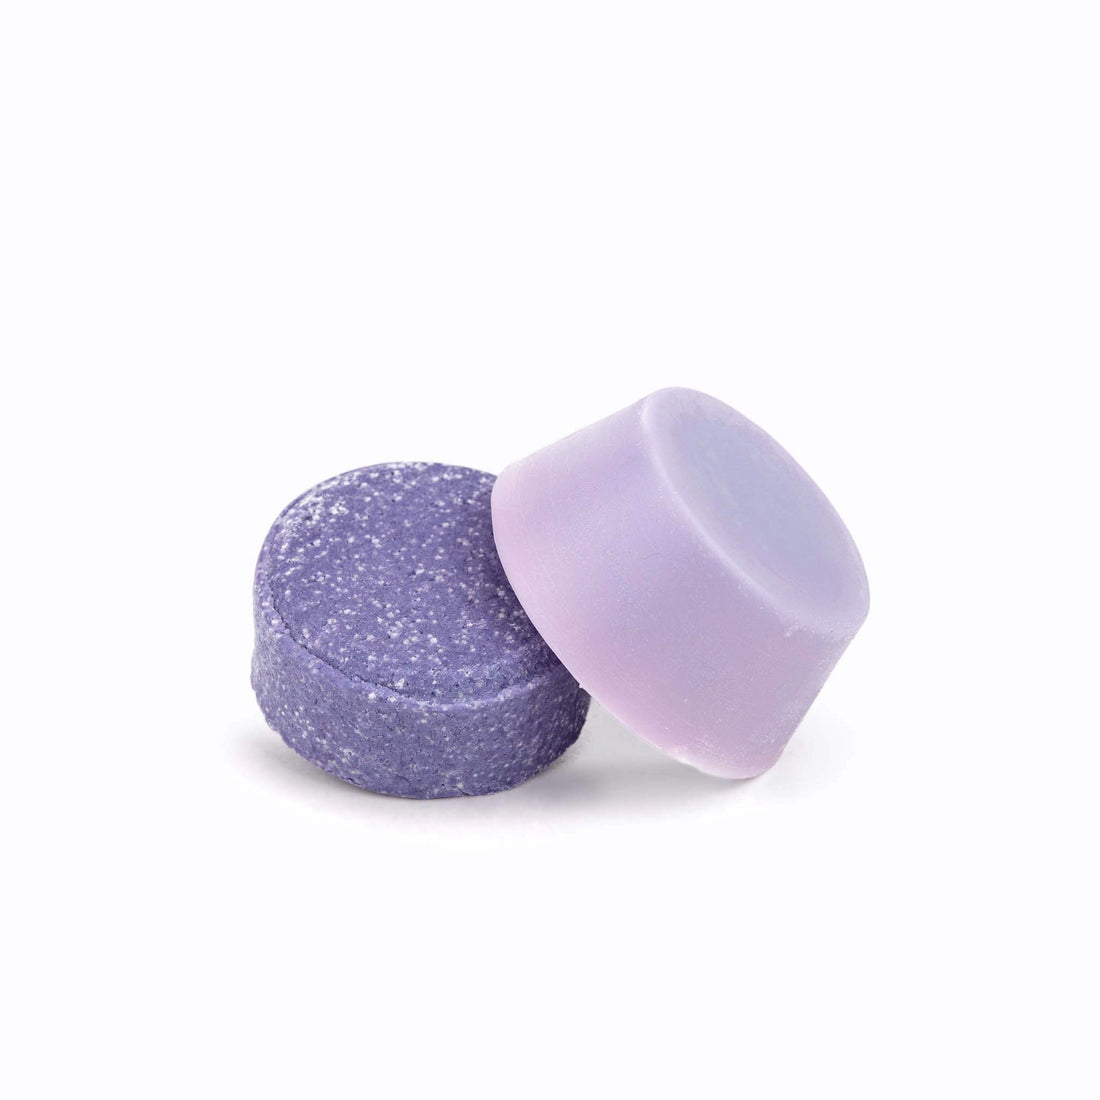 Lavender Shampoo & Conditioner Bar Combo Packs